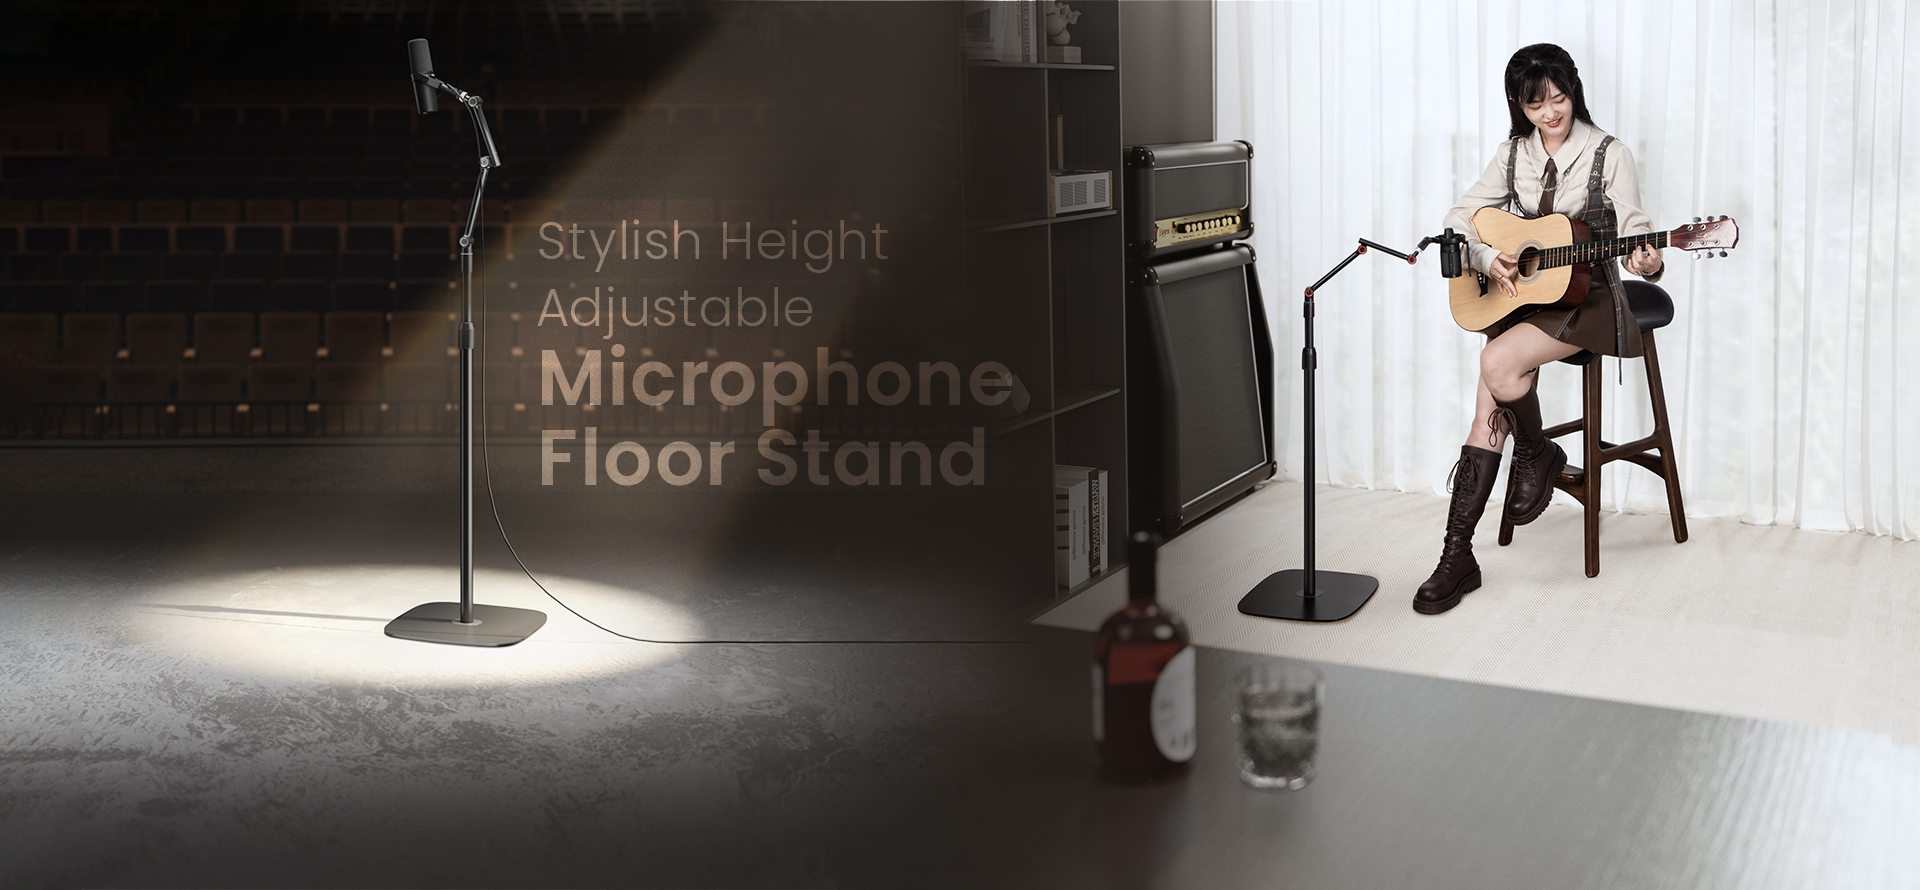 Stylish Height Adjustable Microphone Floor Stand